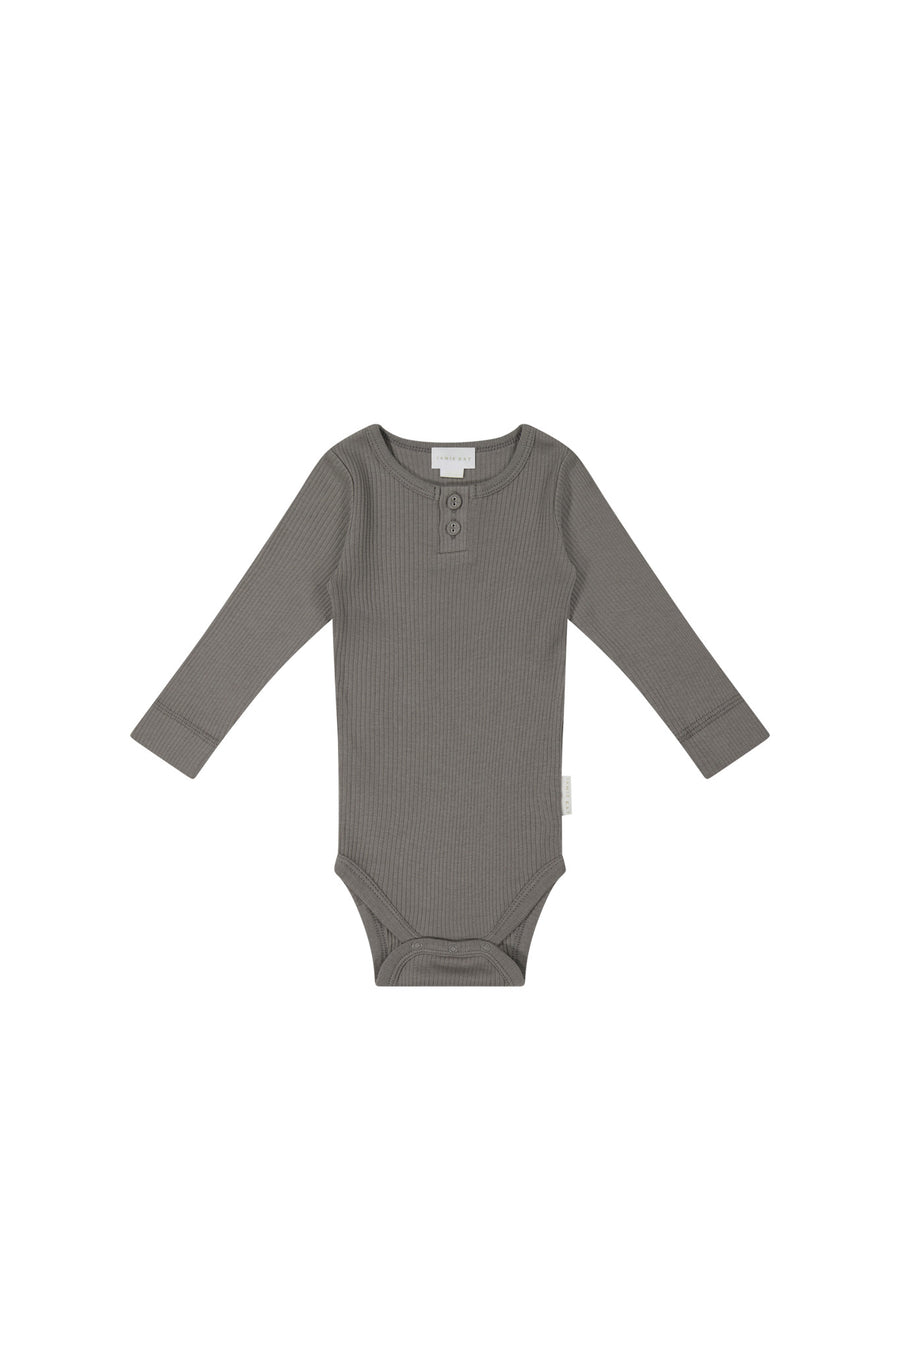 Organic Cotton Modal Long Sleeve Bodysuit - Cobblestone Childrens Bodysuit from Jamie Kay NZ